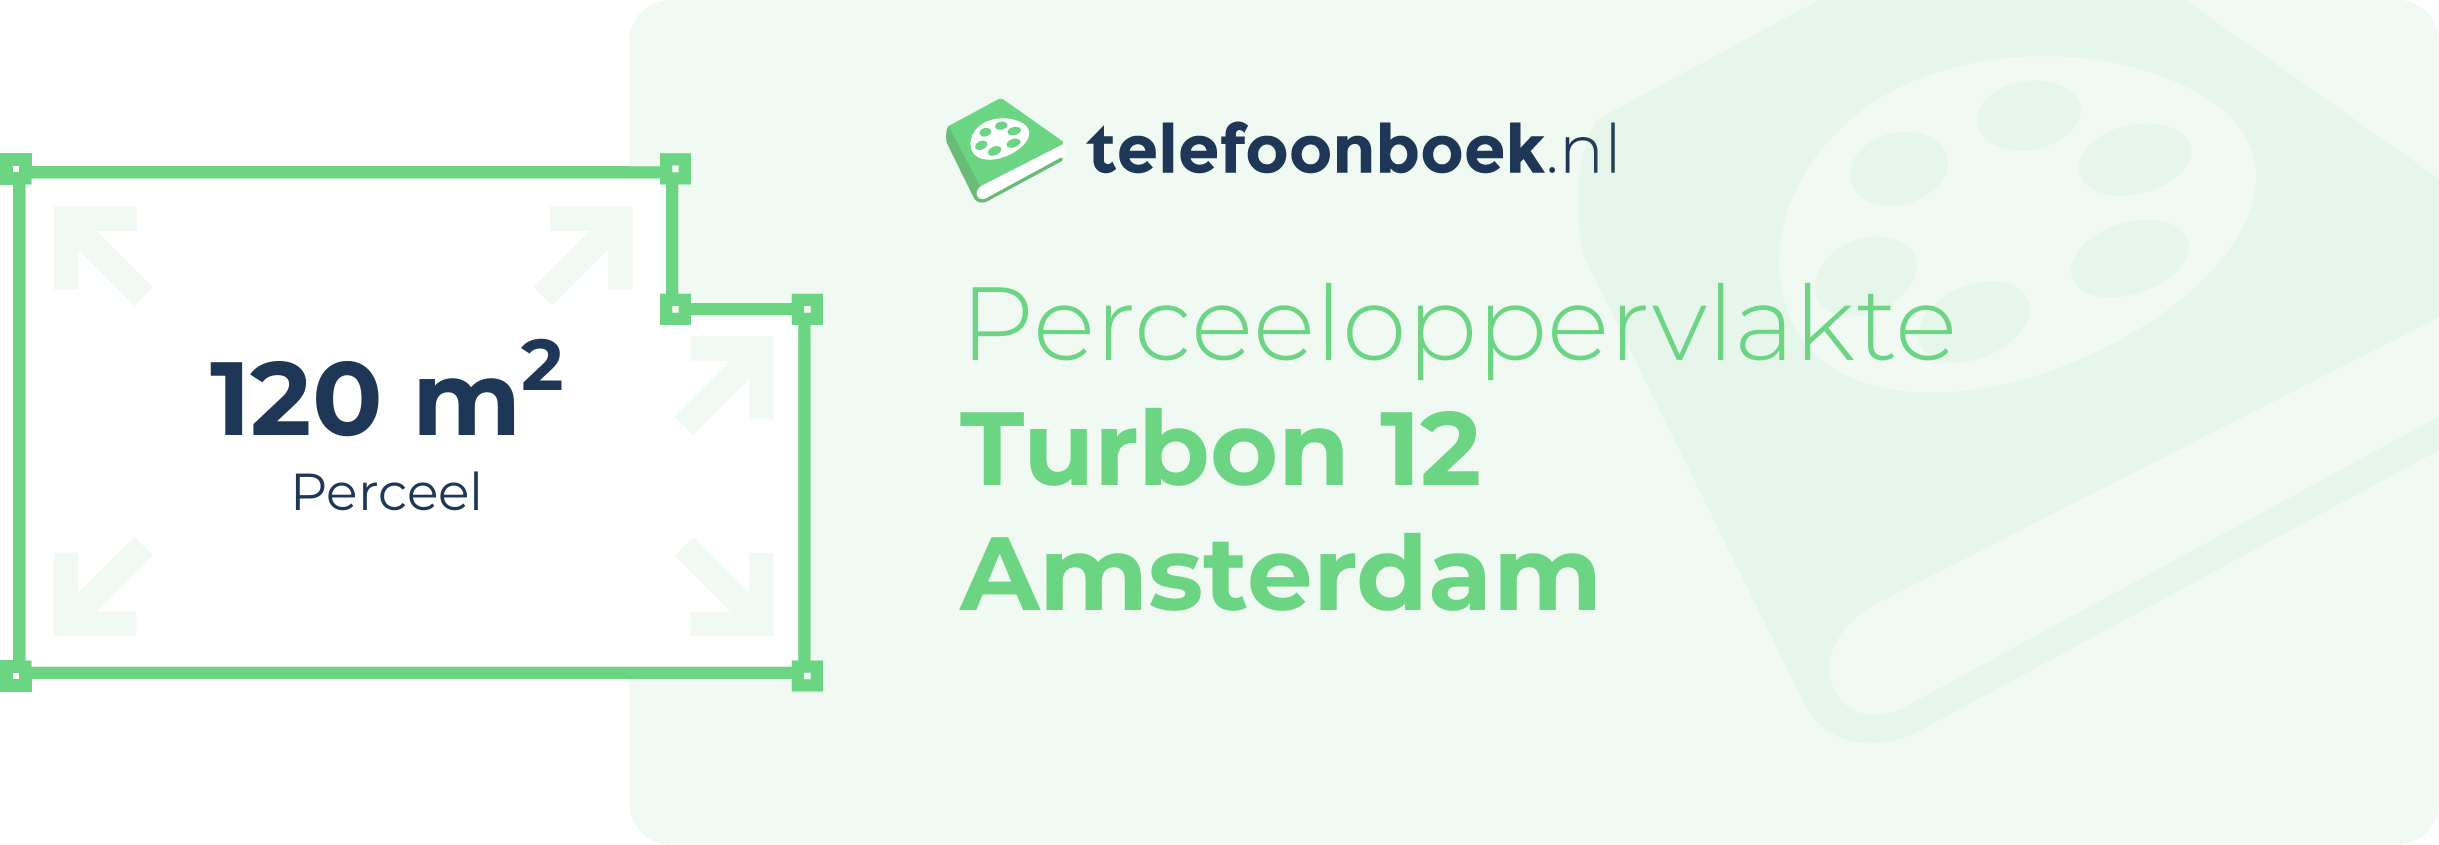 Perceeloppervlakte Turbon 12 Amsterdam